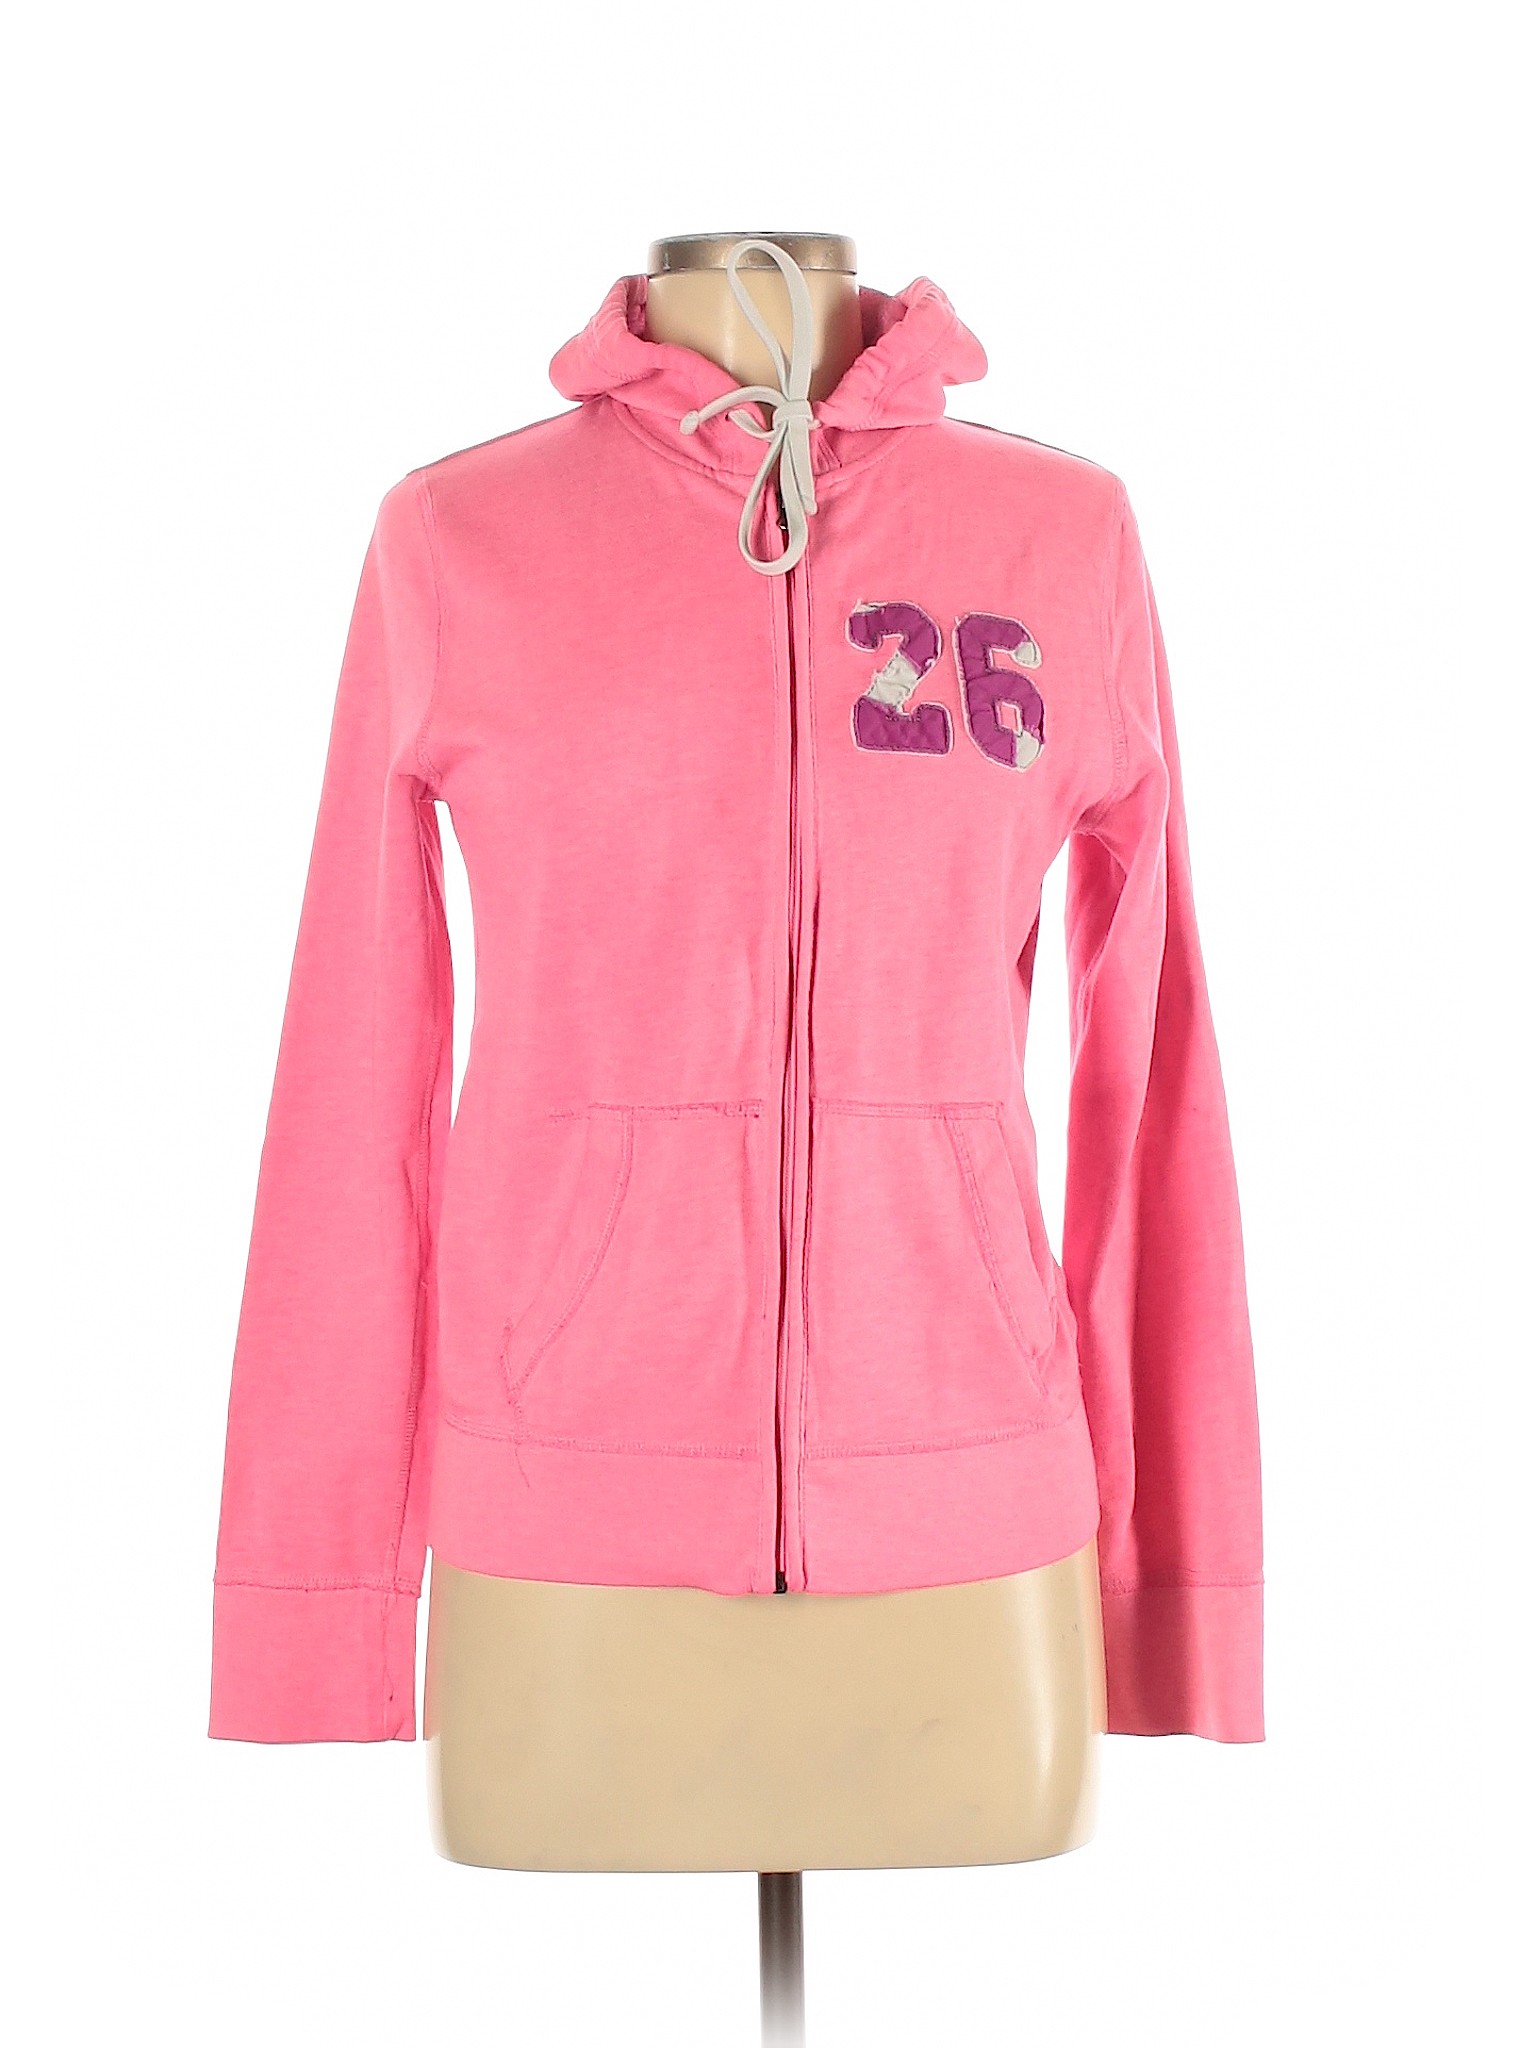 Mossimo Supply Co. Women Pink Zip Up Hoodie M | eBay